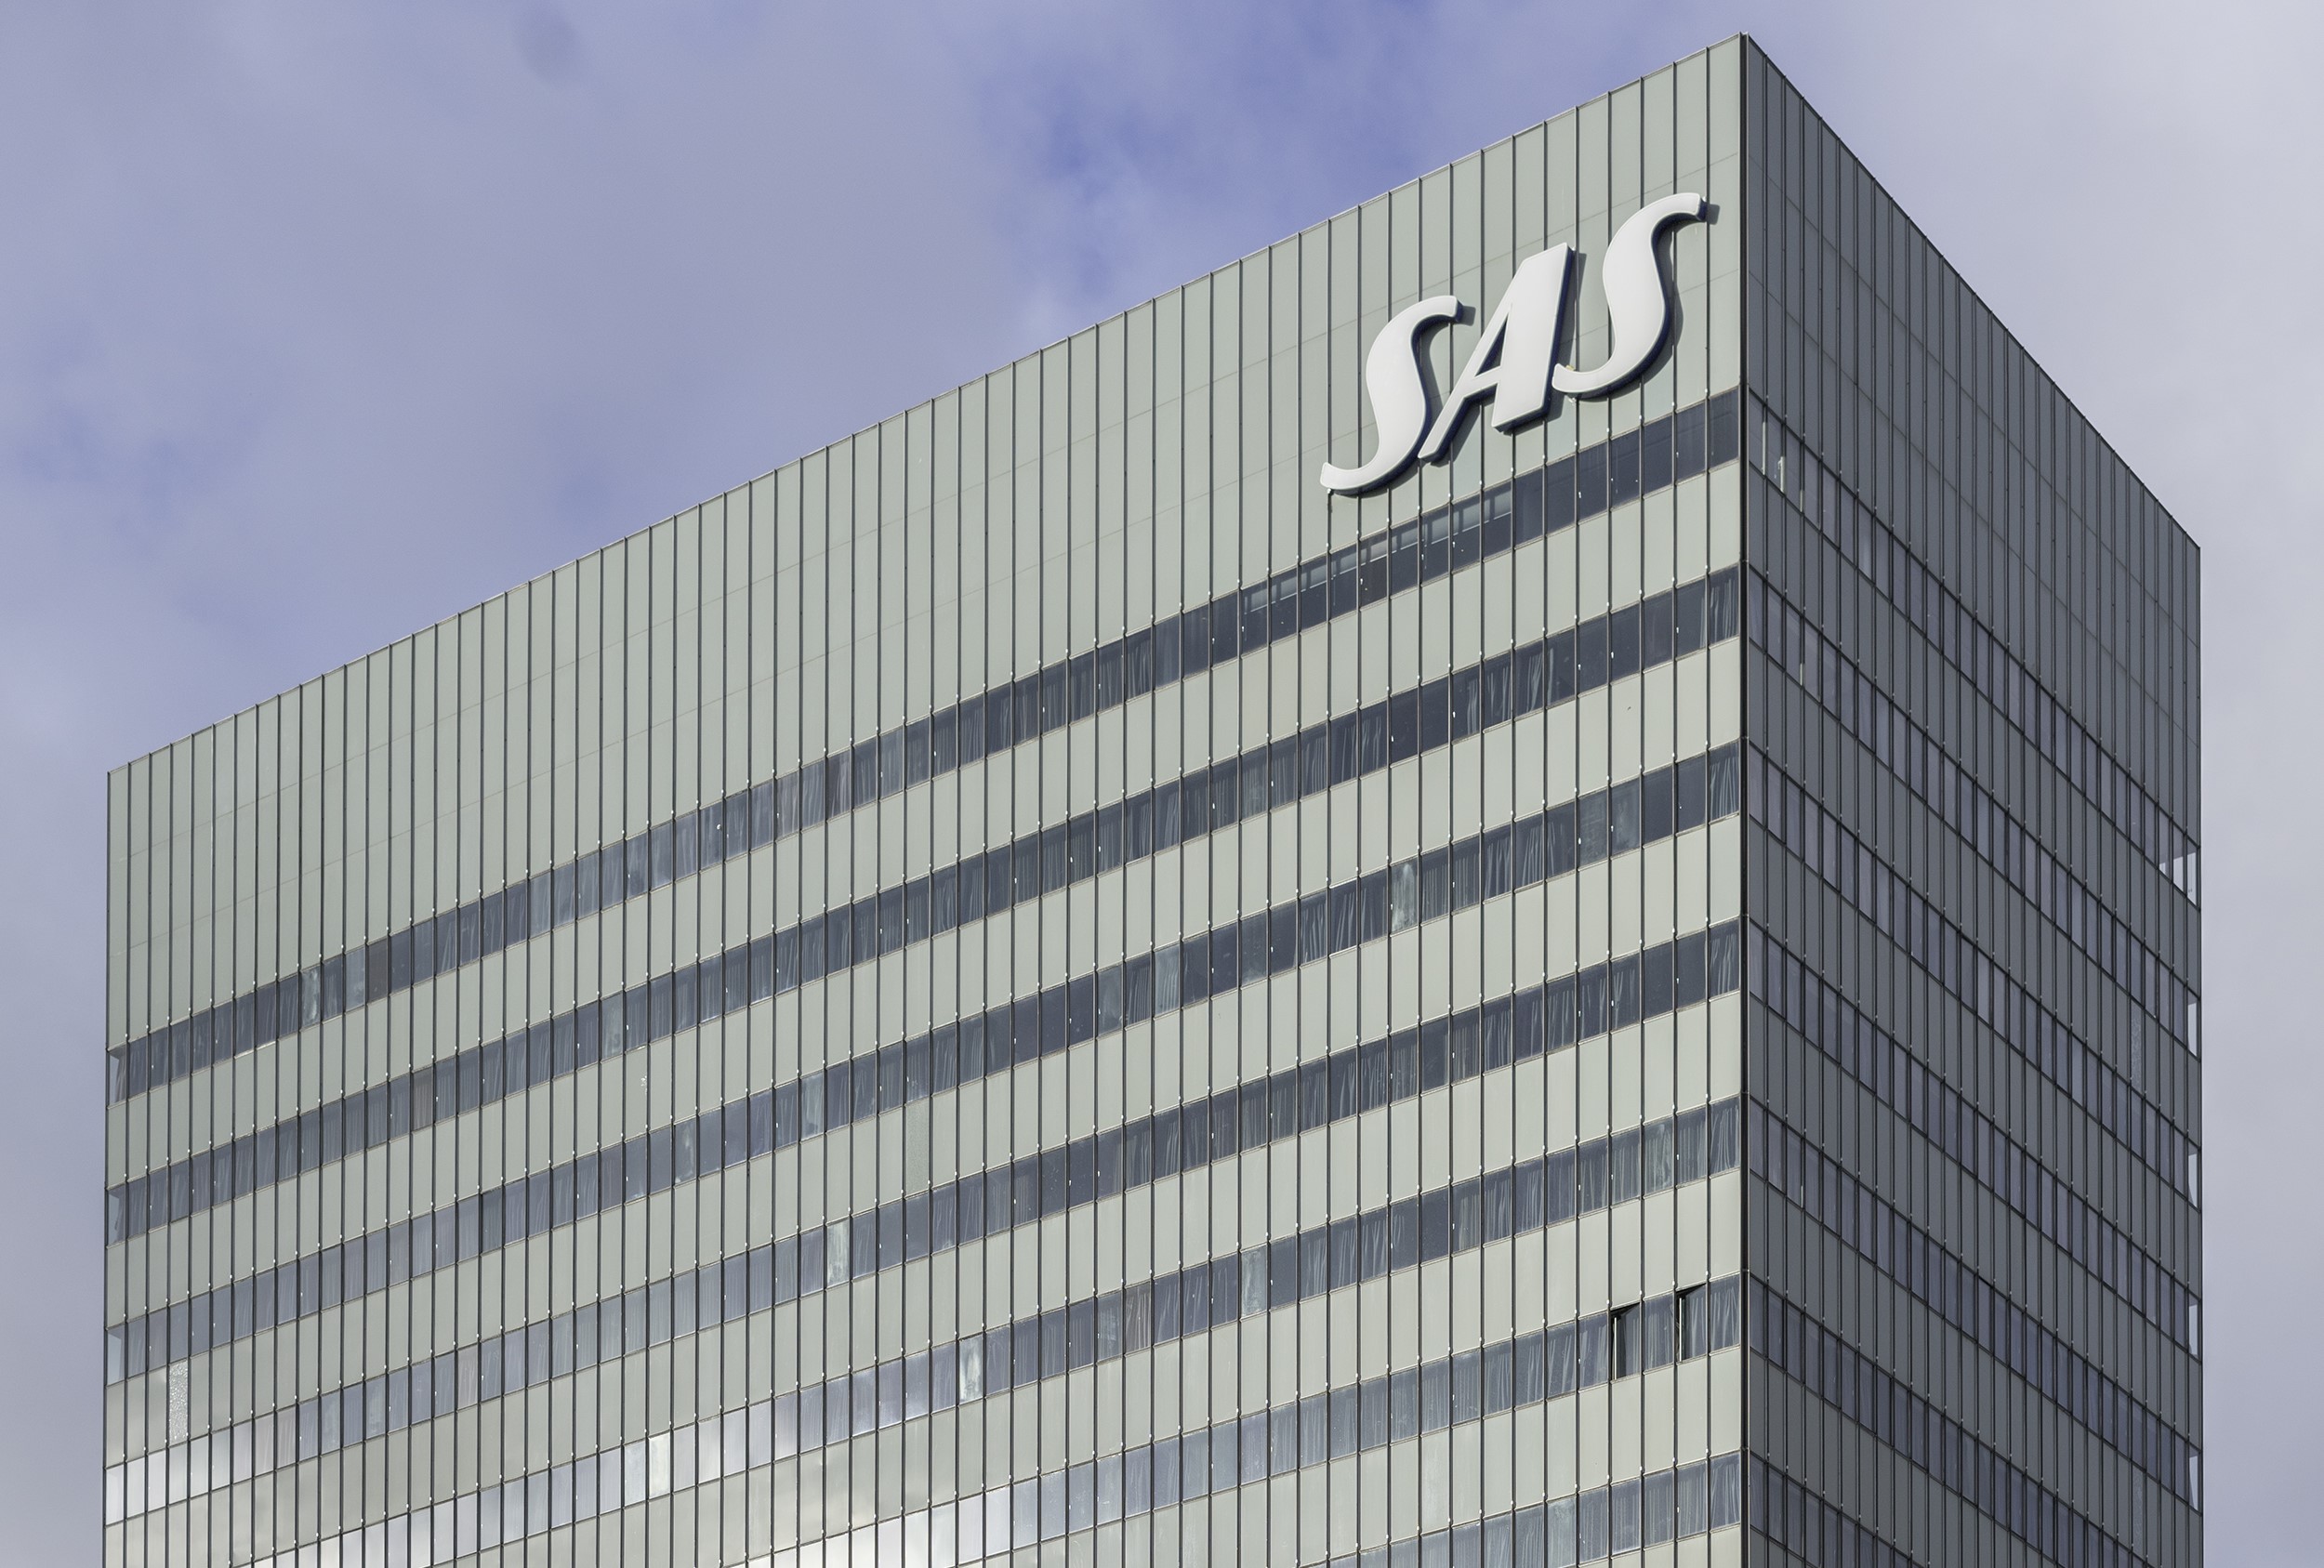 The SAS building